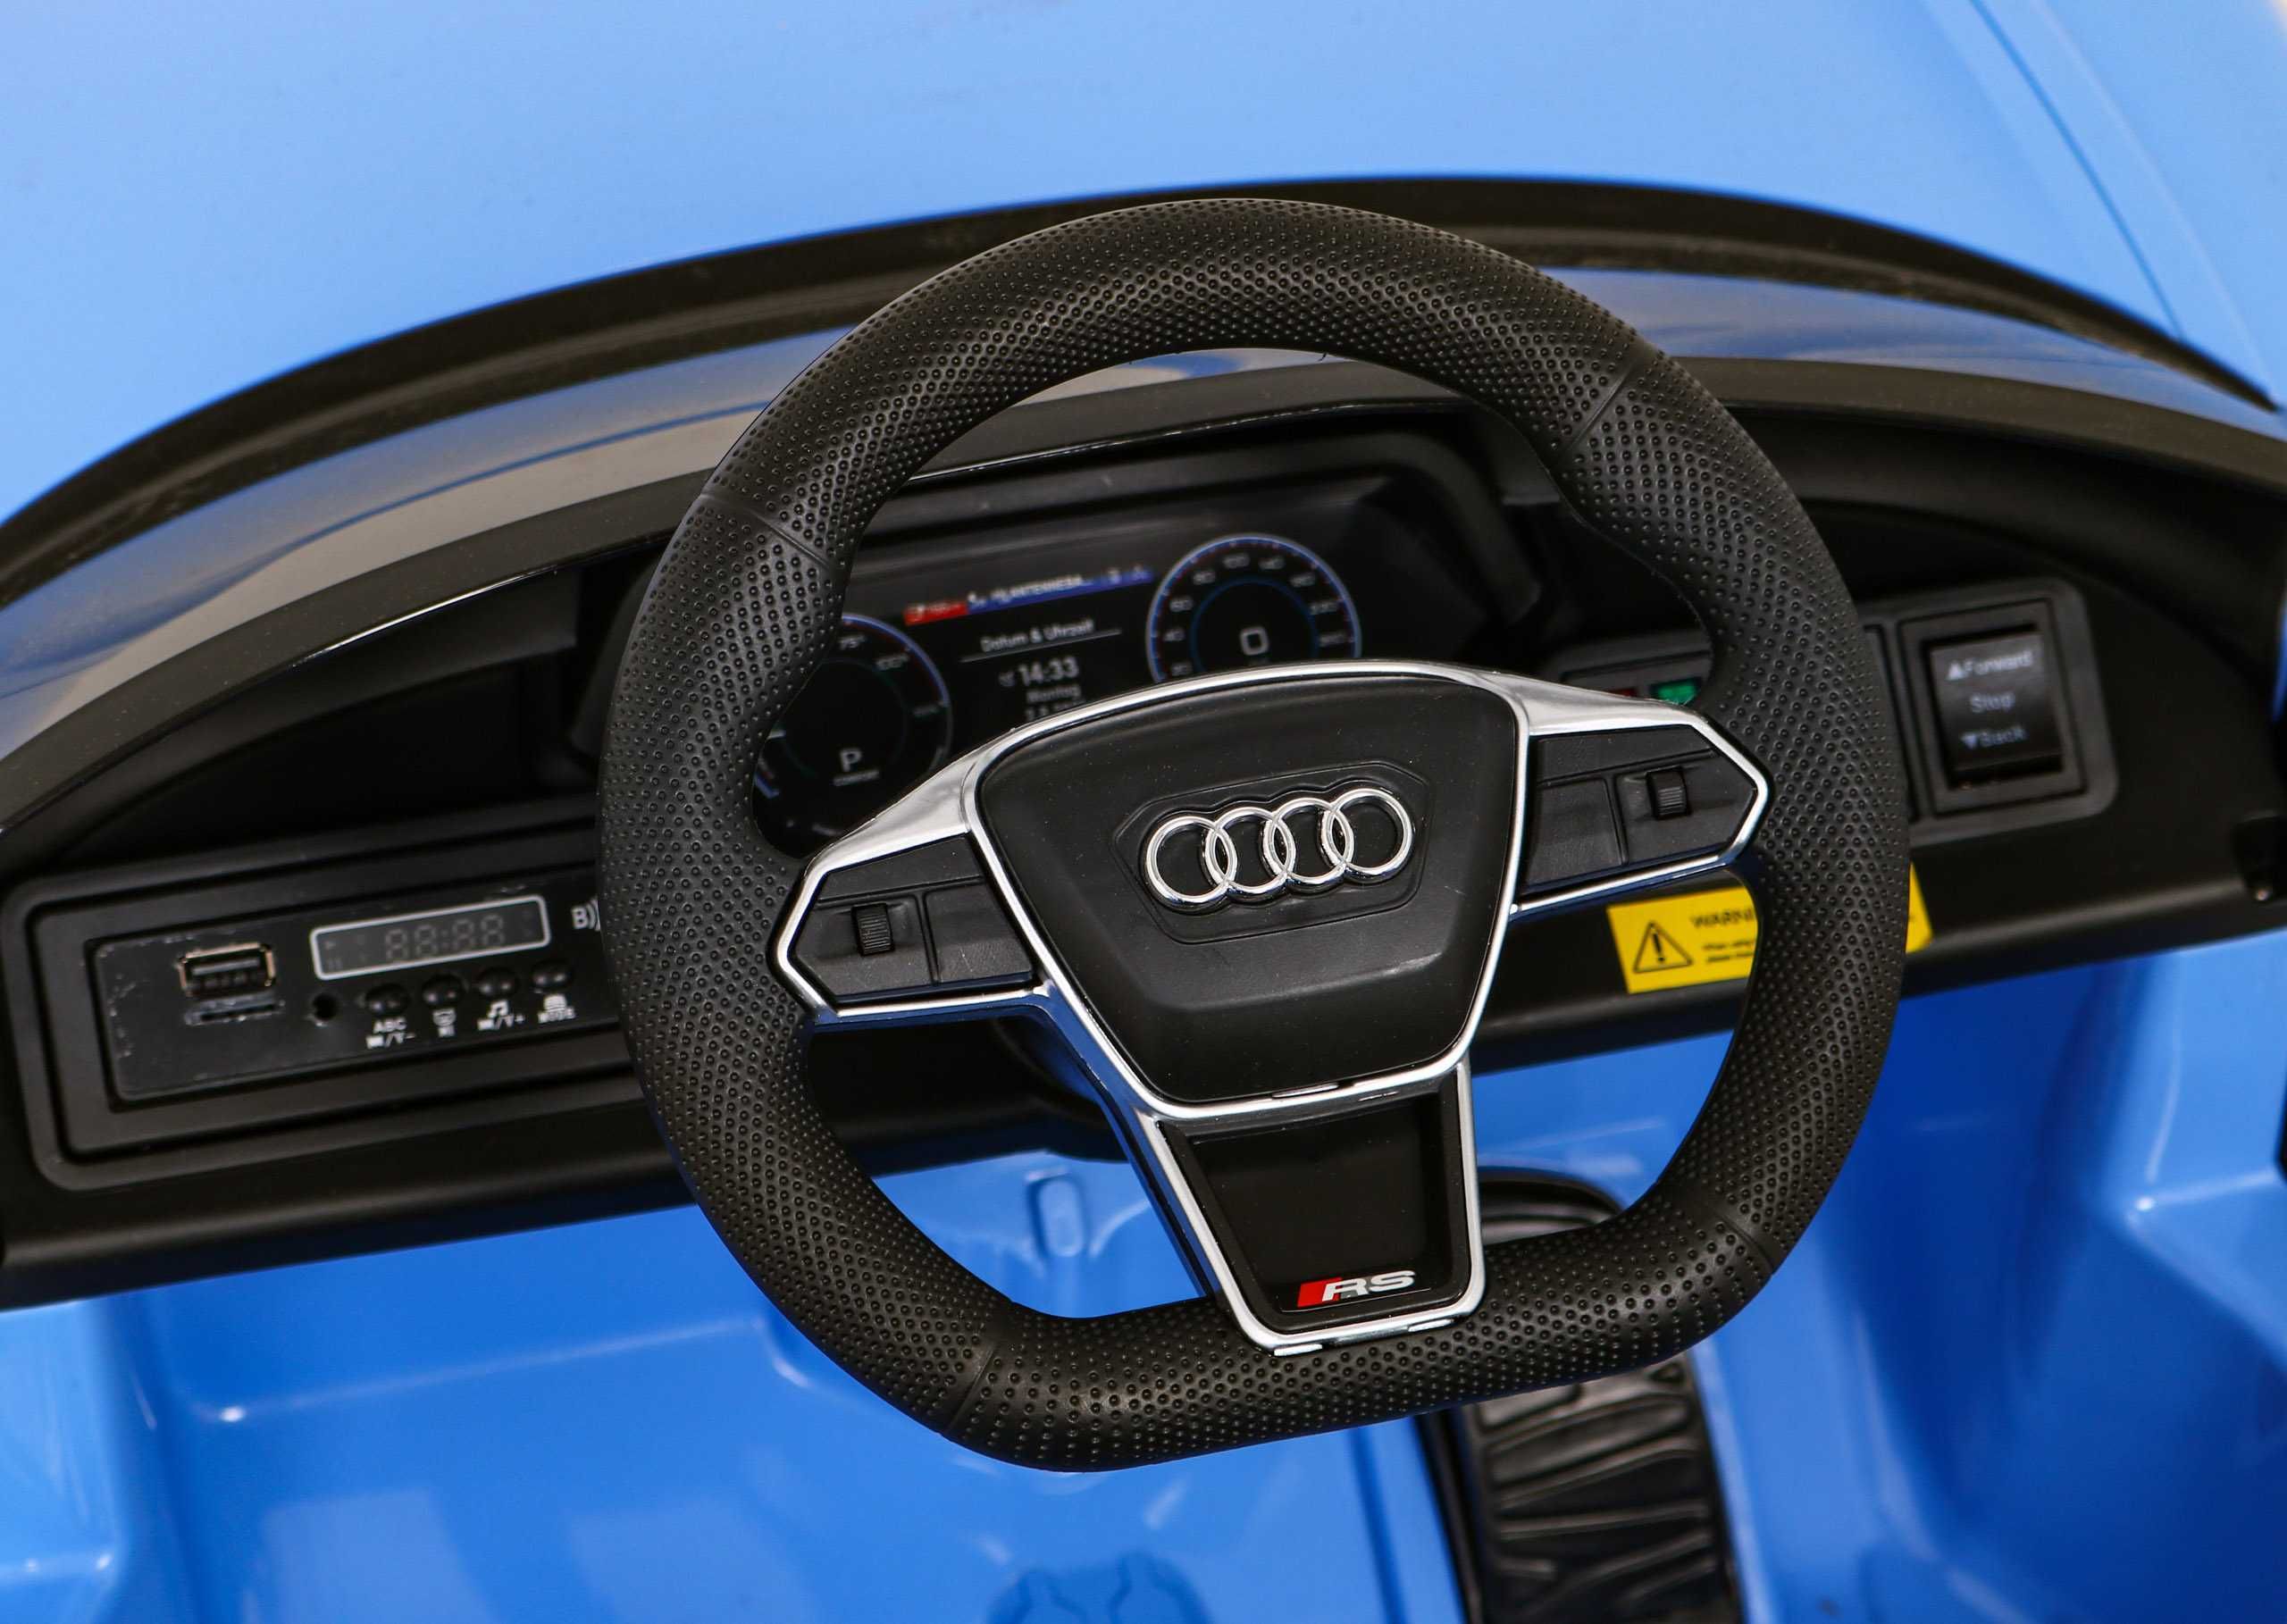 Audi RS E-Tron GT na akumulator Niebieski QLS-6888